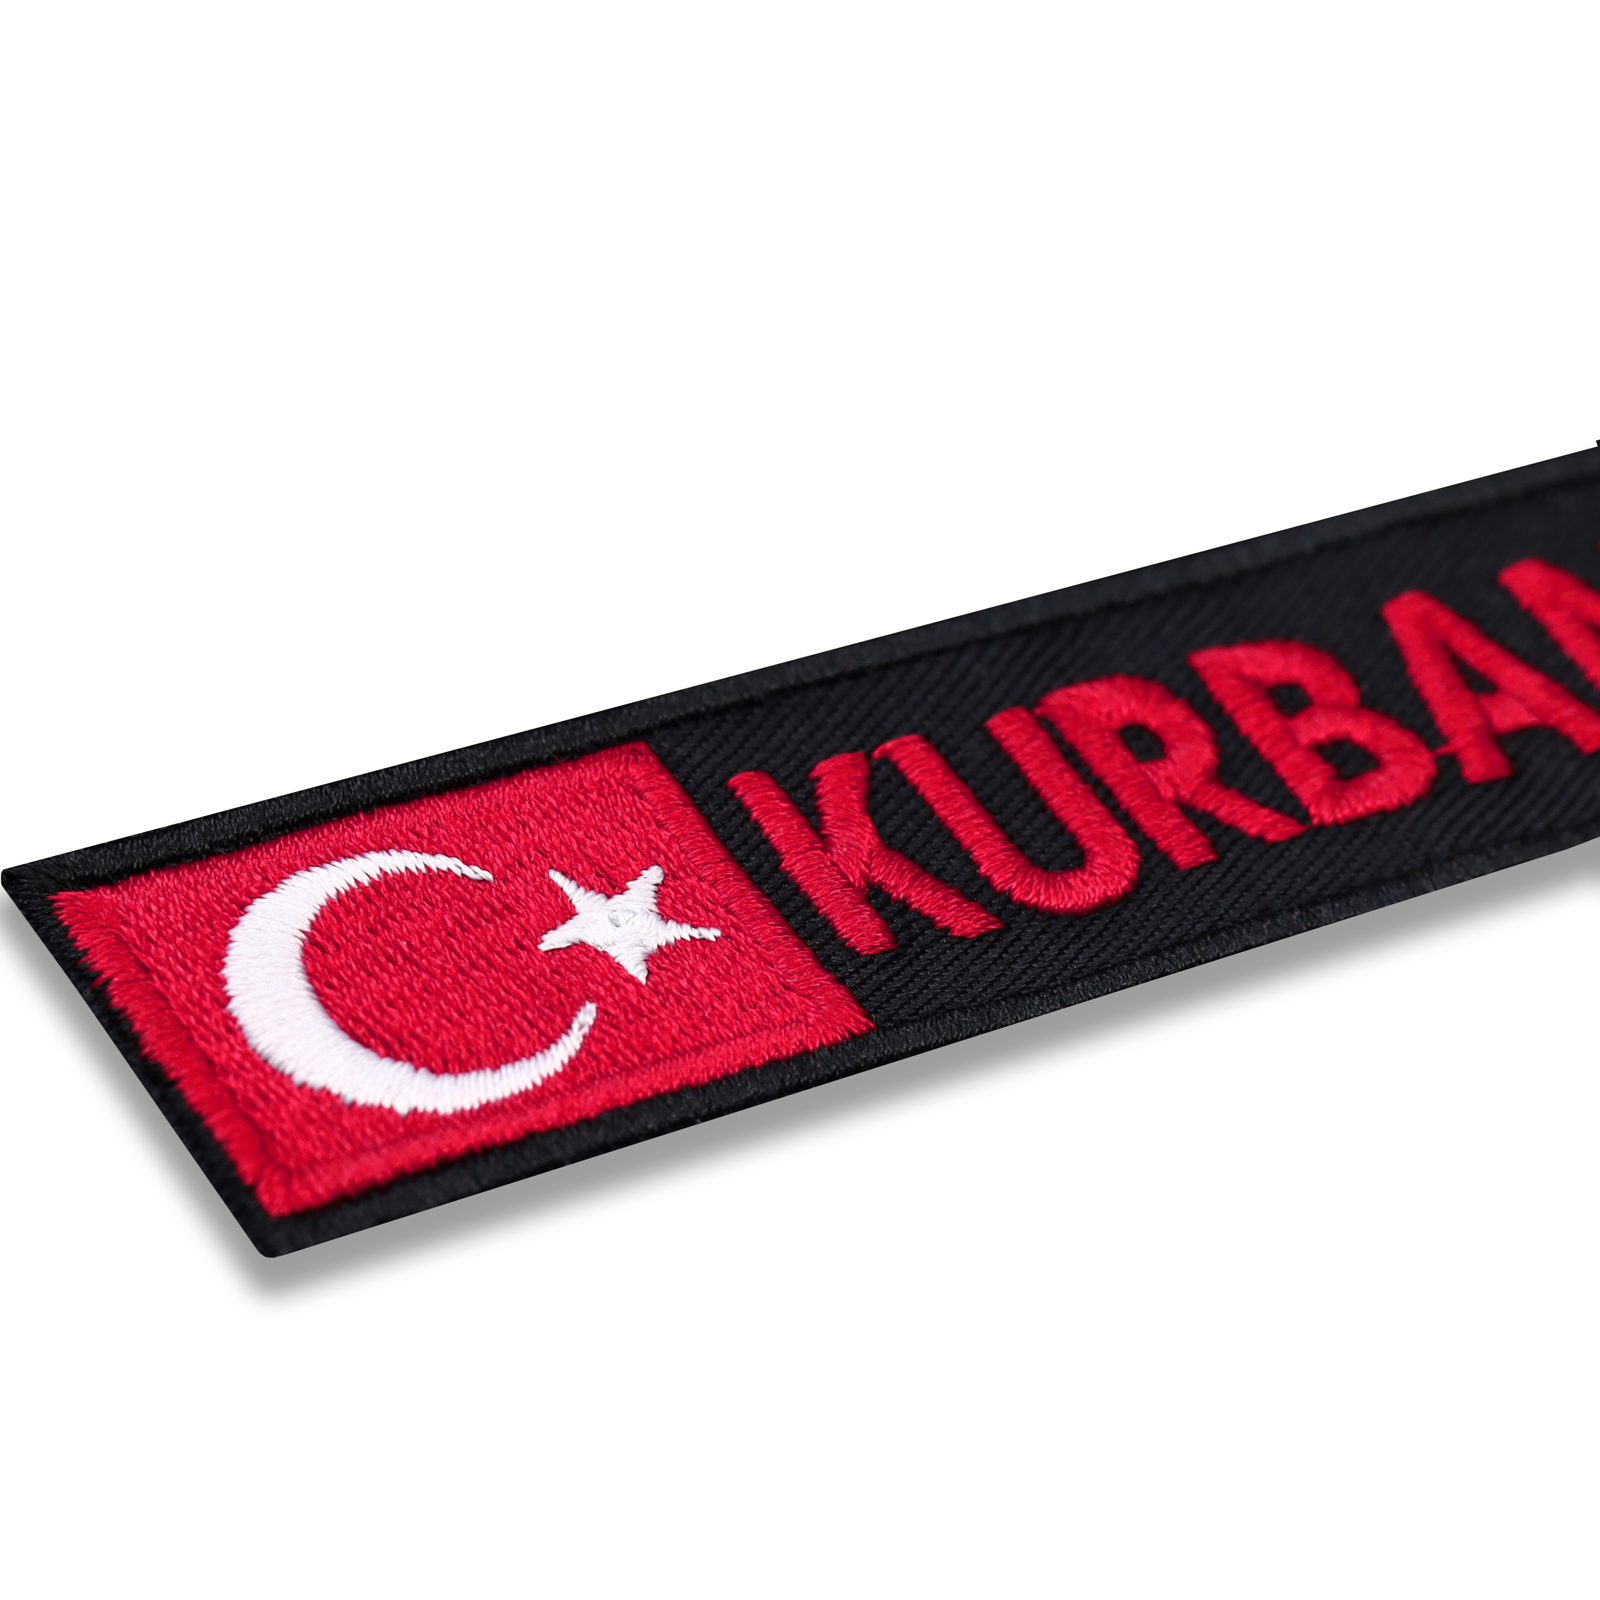 Türkei Personalisiert - Patch